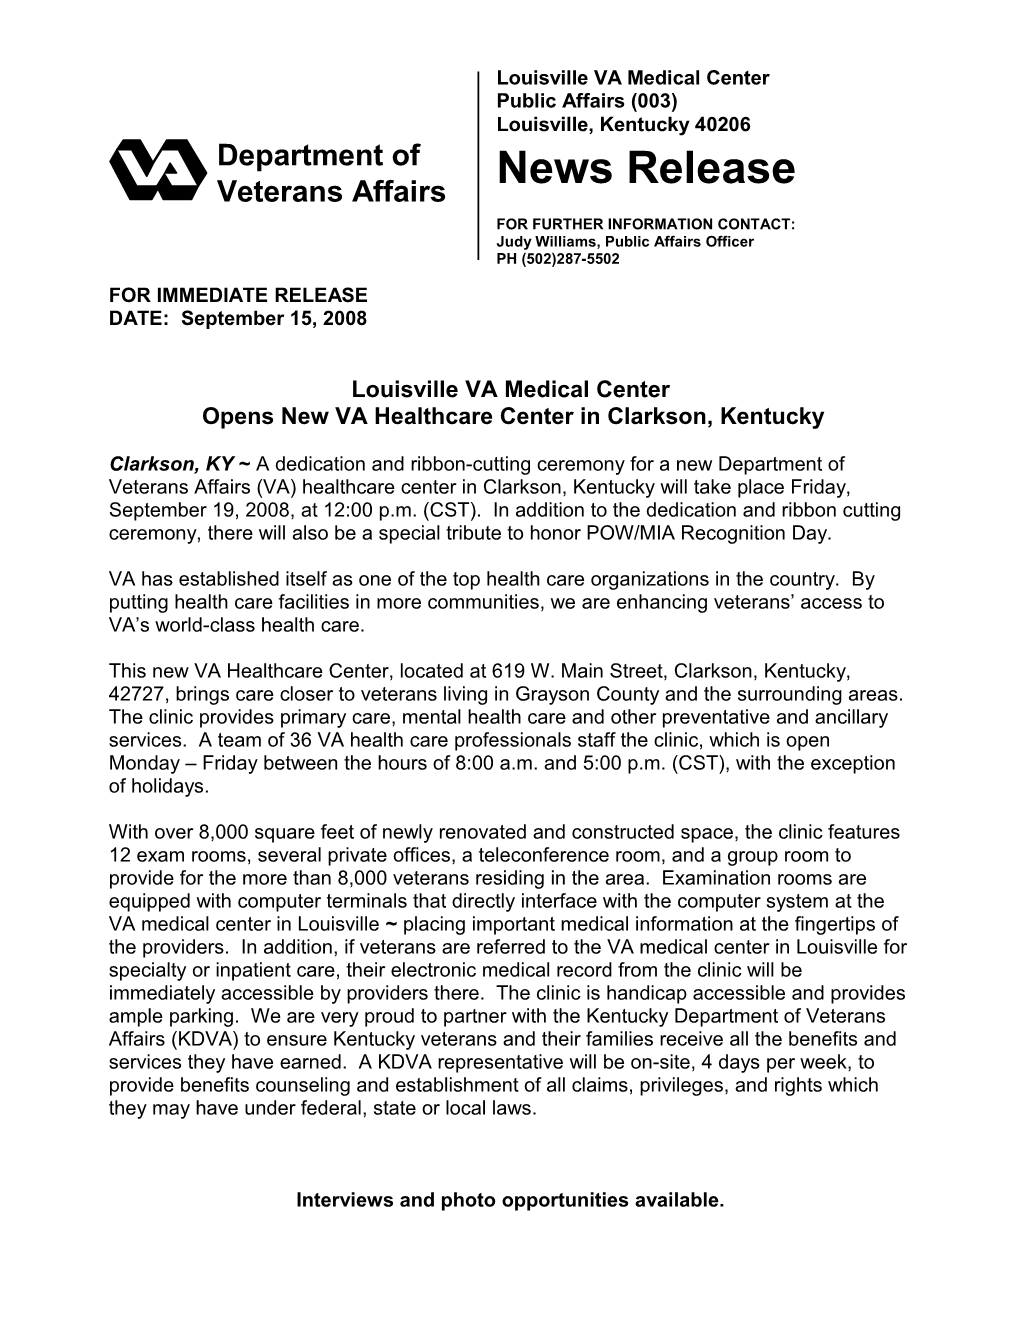 Opens New VA Healthcare Center in Clarkson, Kentucky